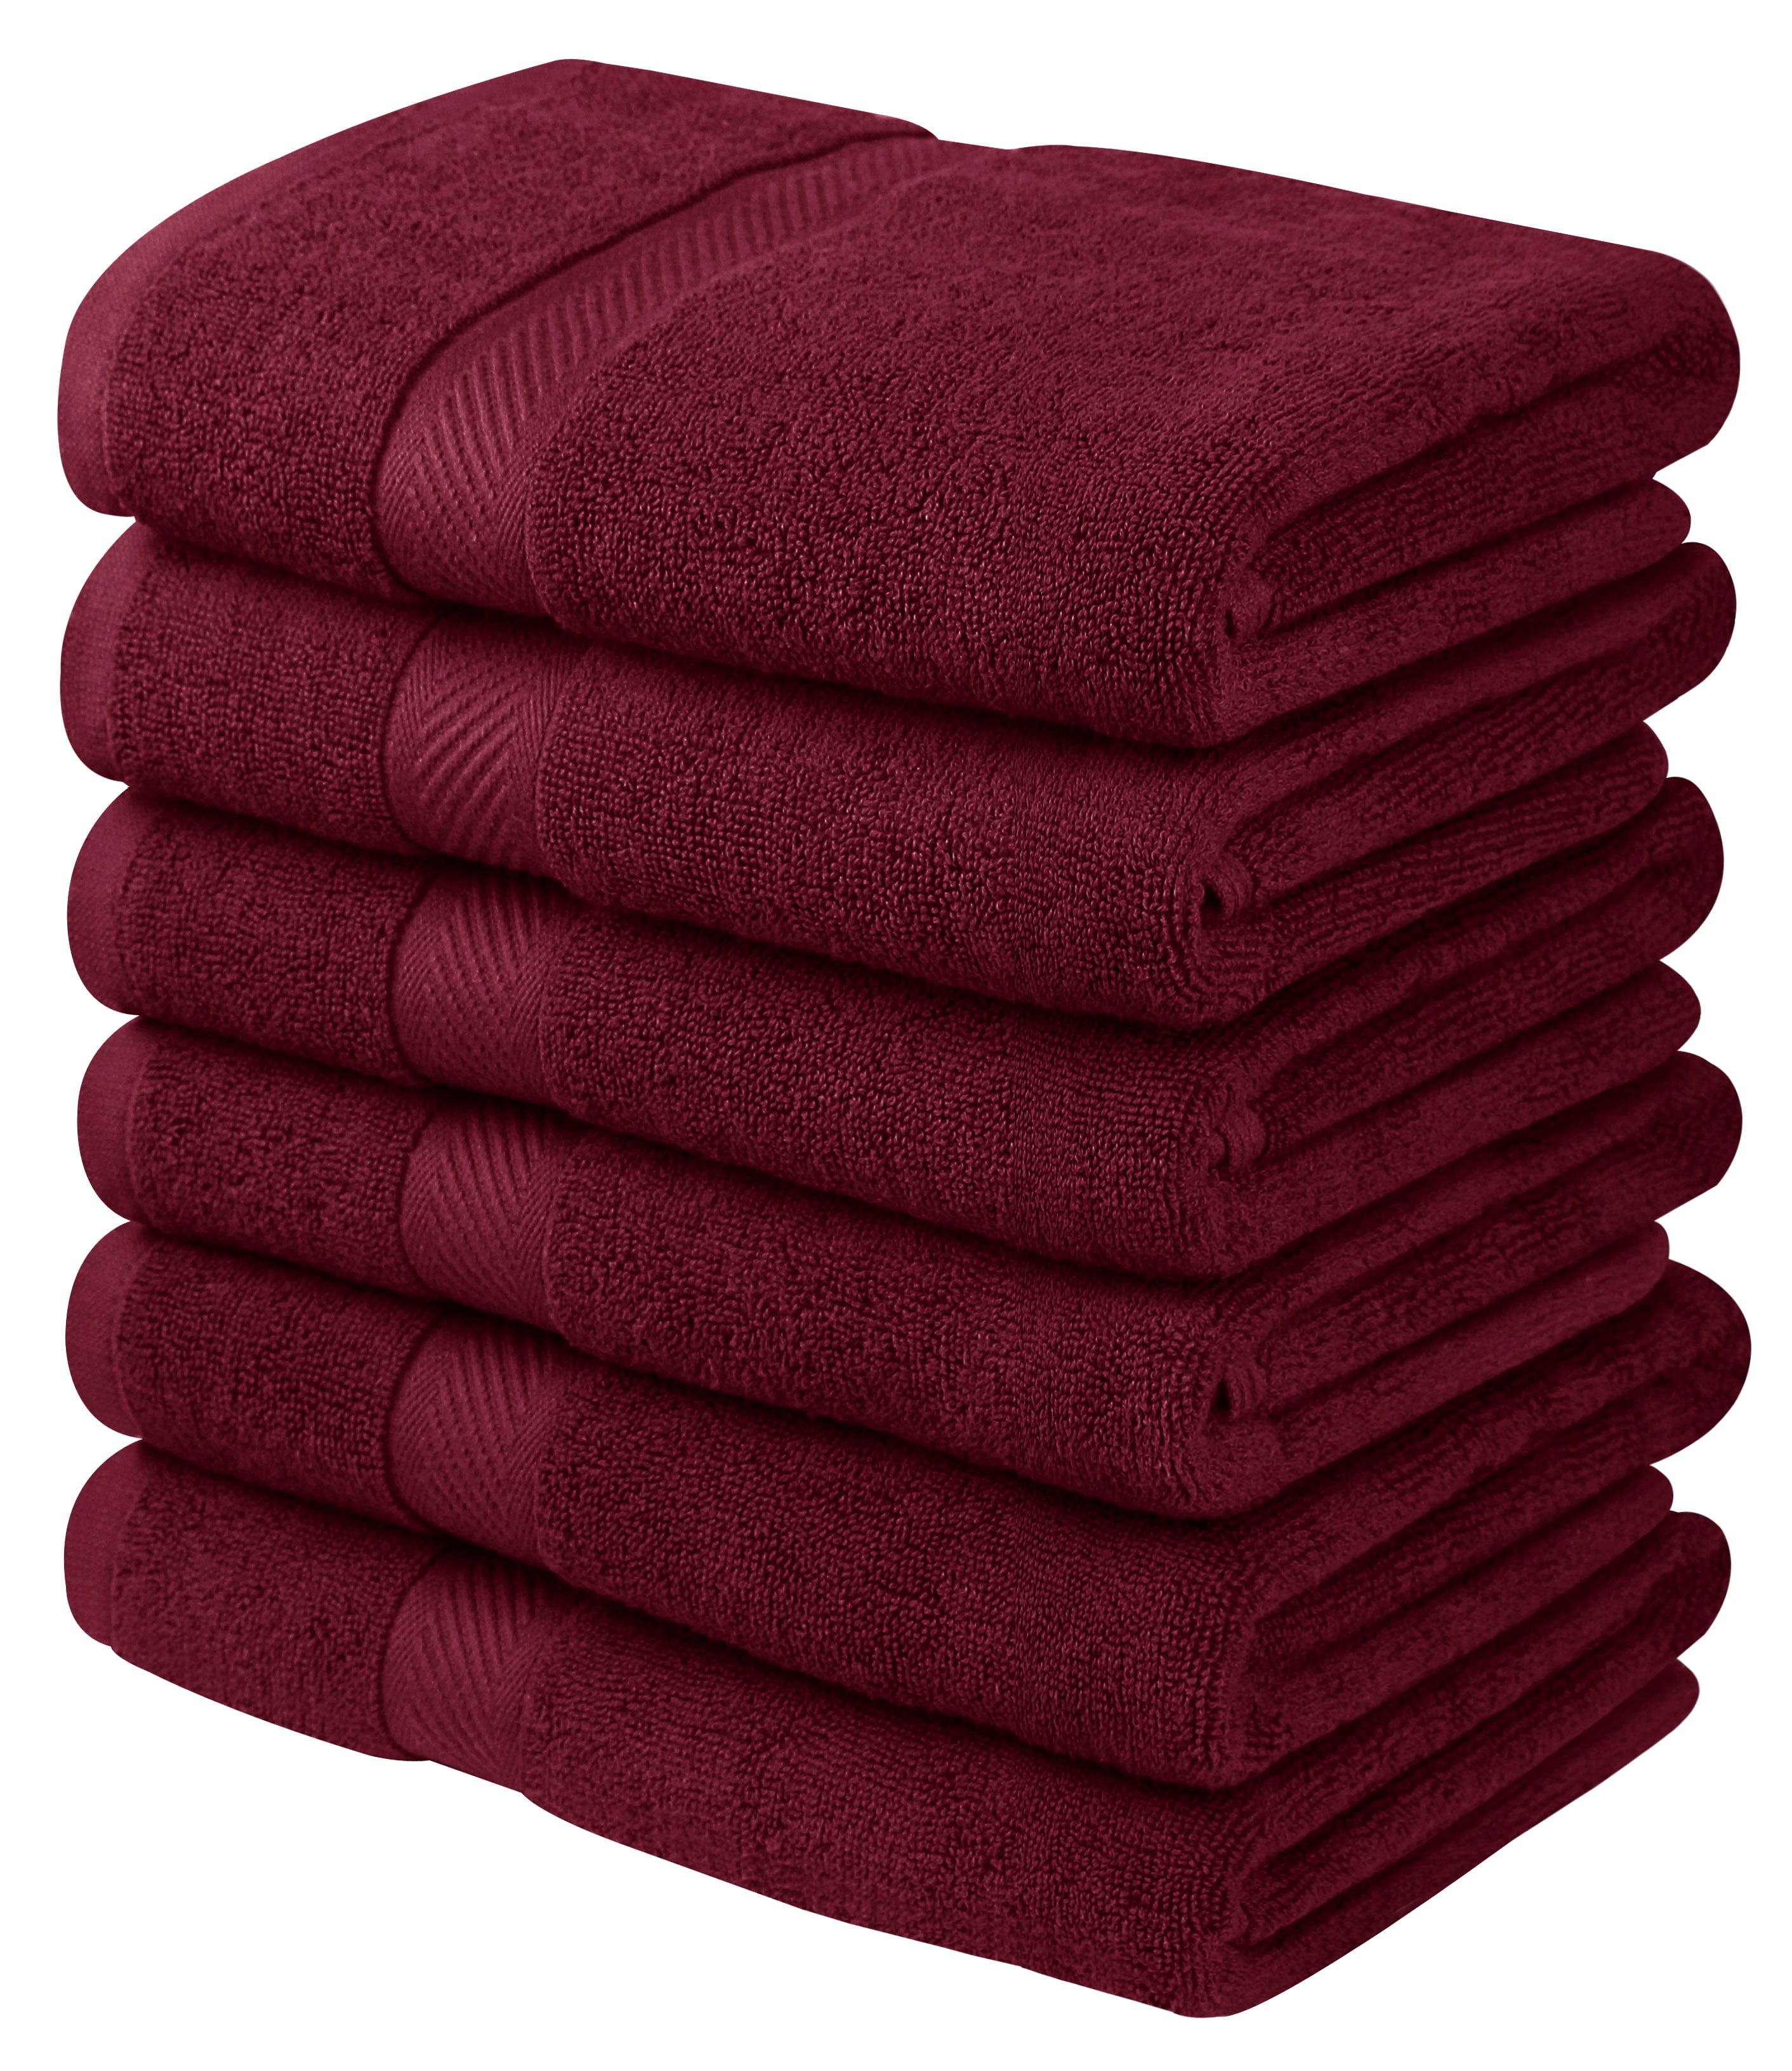 Asiatique Linen – Luxury 650 GSM Red Wine Stripes Large Bath Towels – 27x54  (4 Pack) Towels for Bathroom 